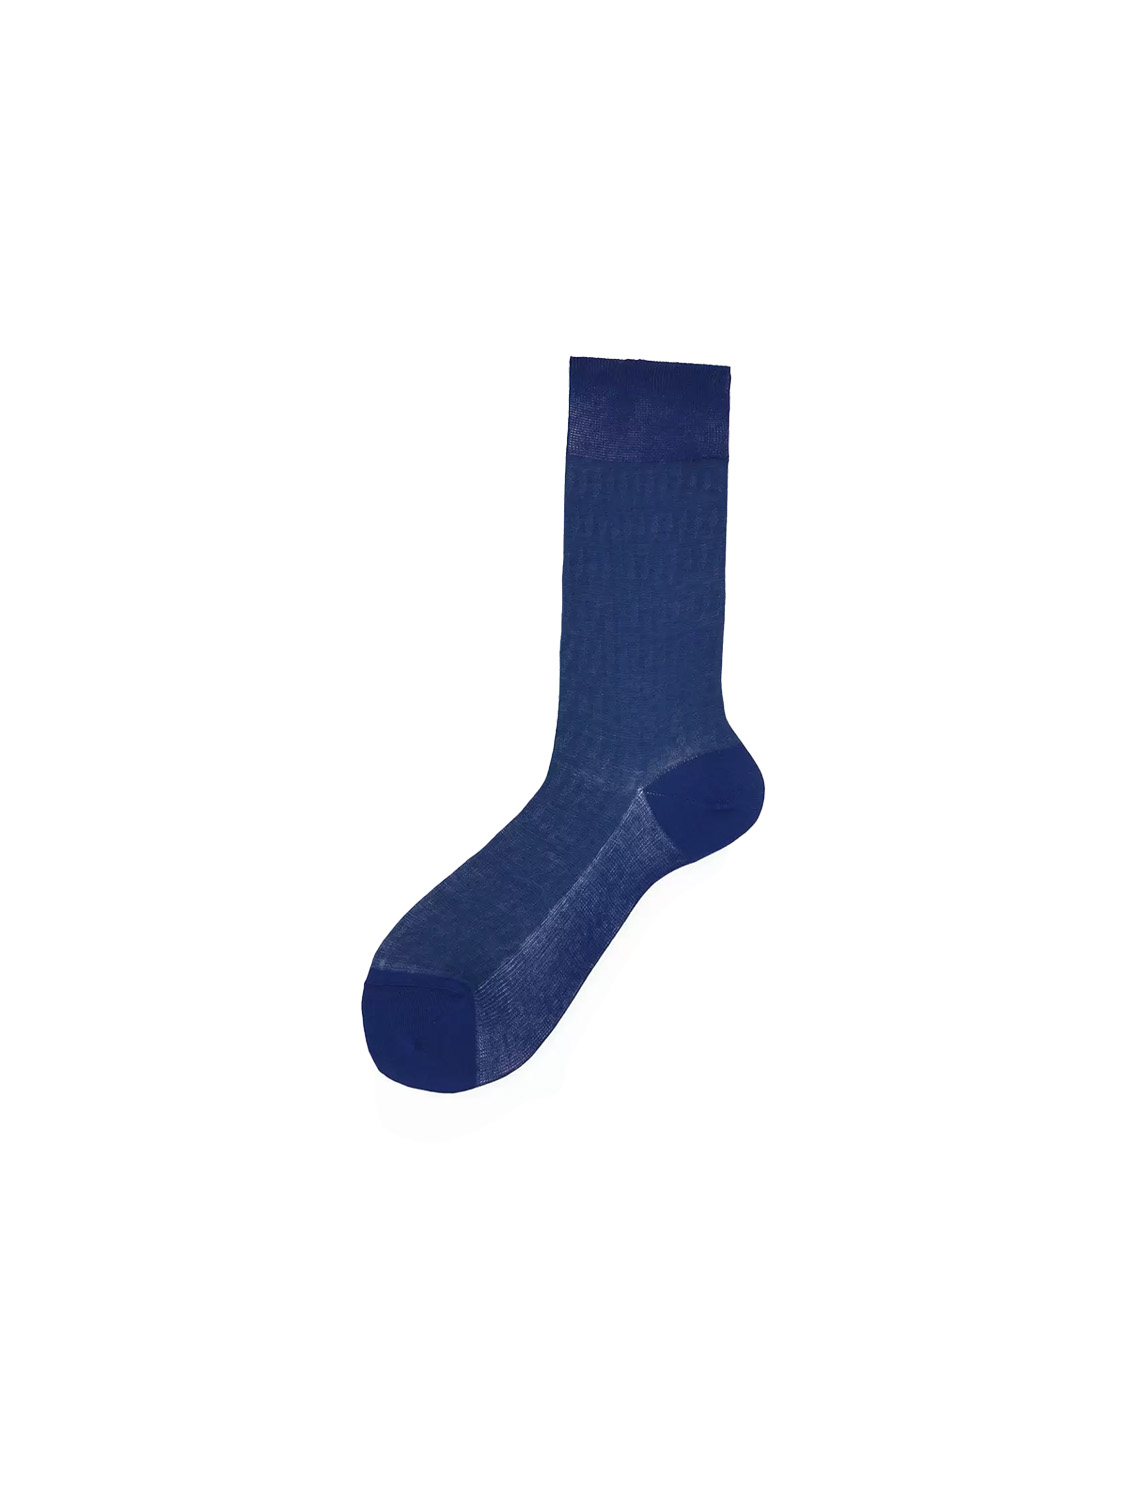 Alto Pyne – Kurze Baumwoll-Socken mit gestreiftem Muster   marina Talla única